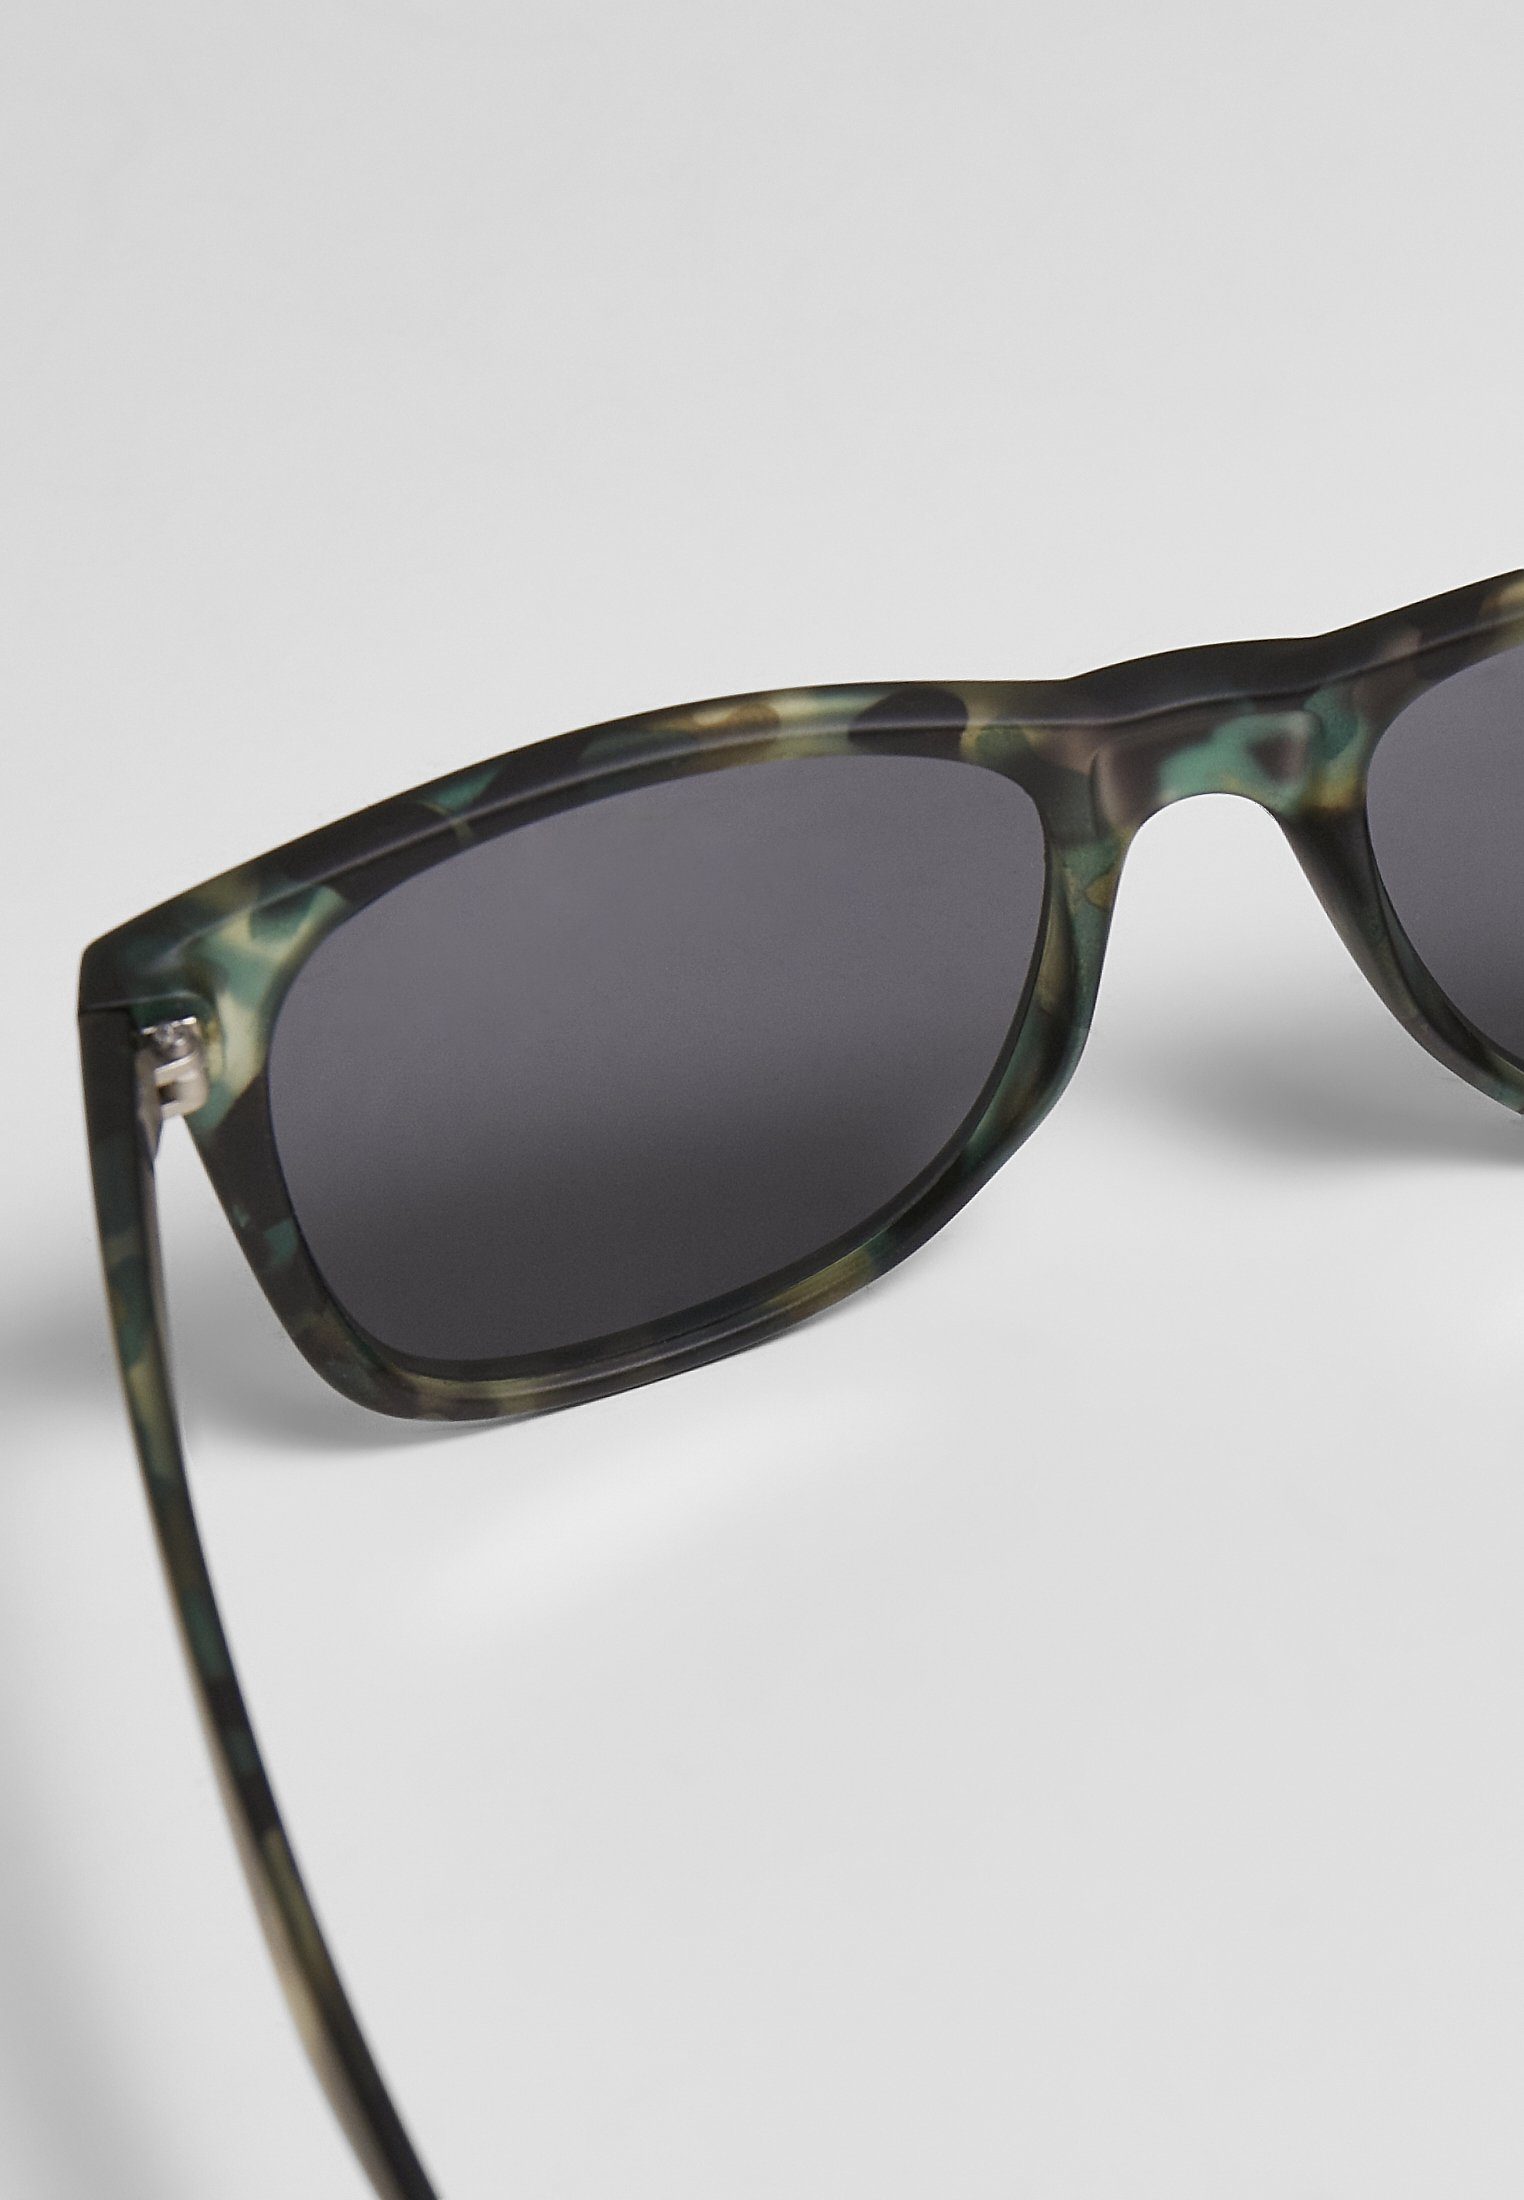 UC Sunglasses CLASSICS Likoma URBAN Sonnenbrille camouflage Accessoires